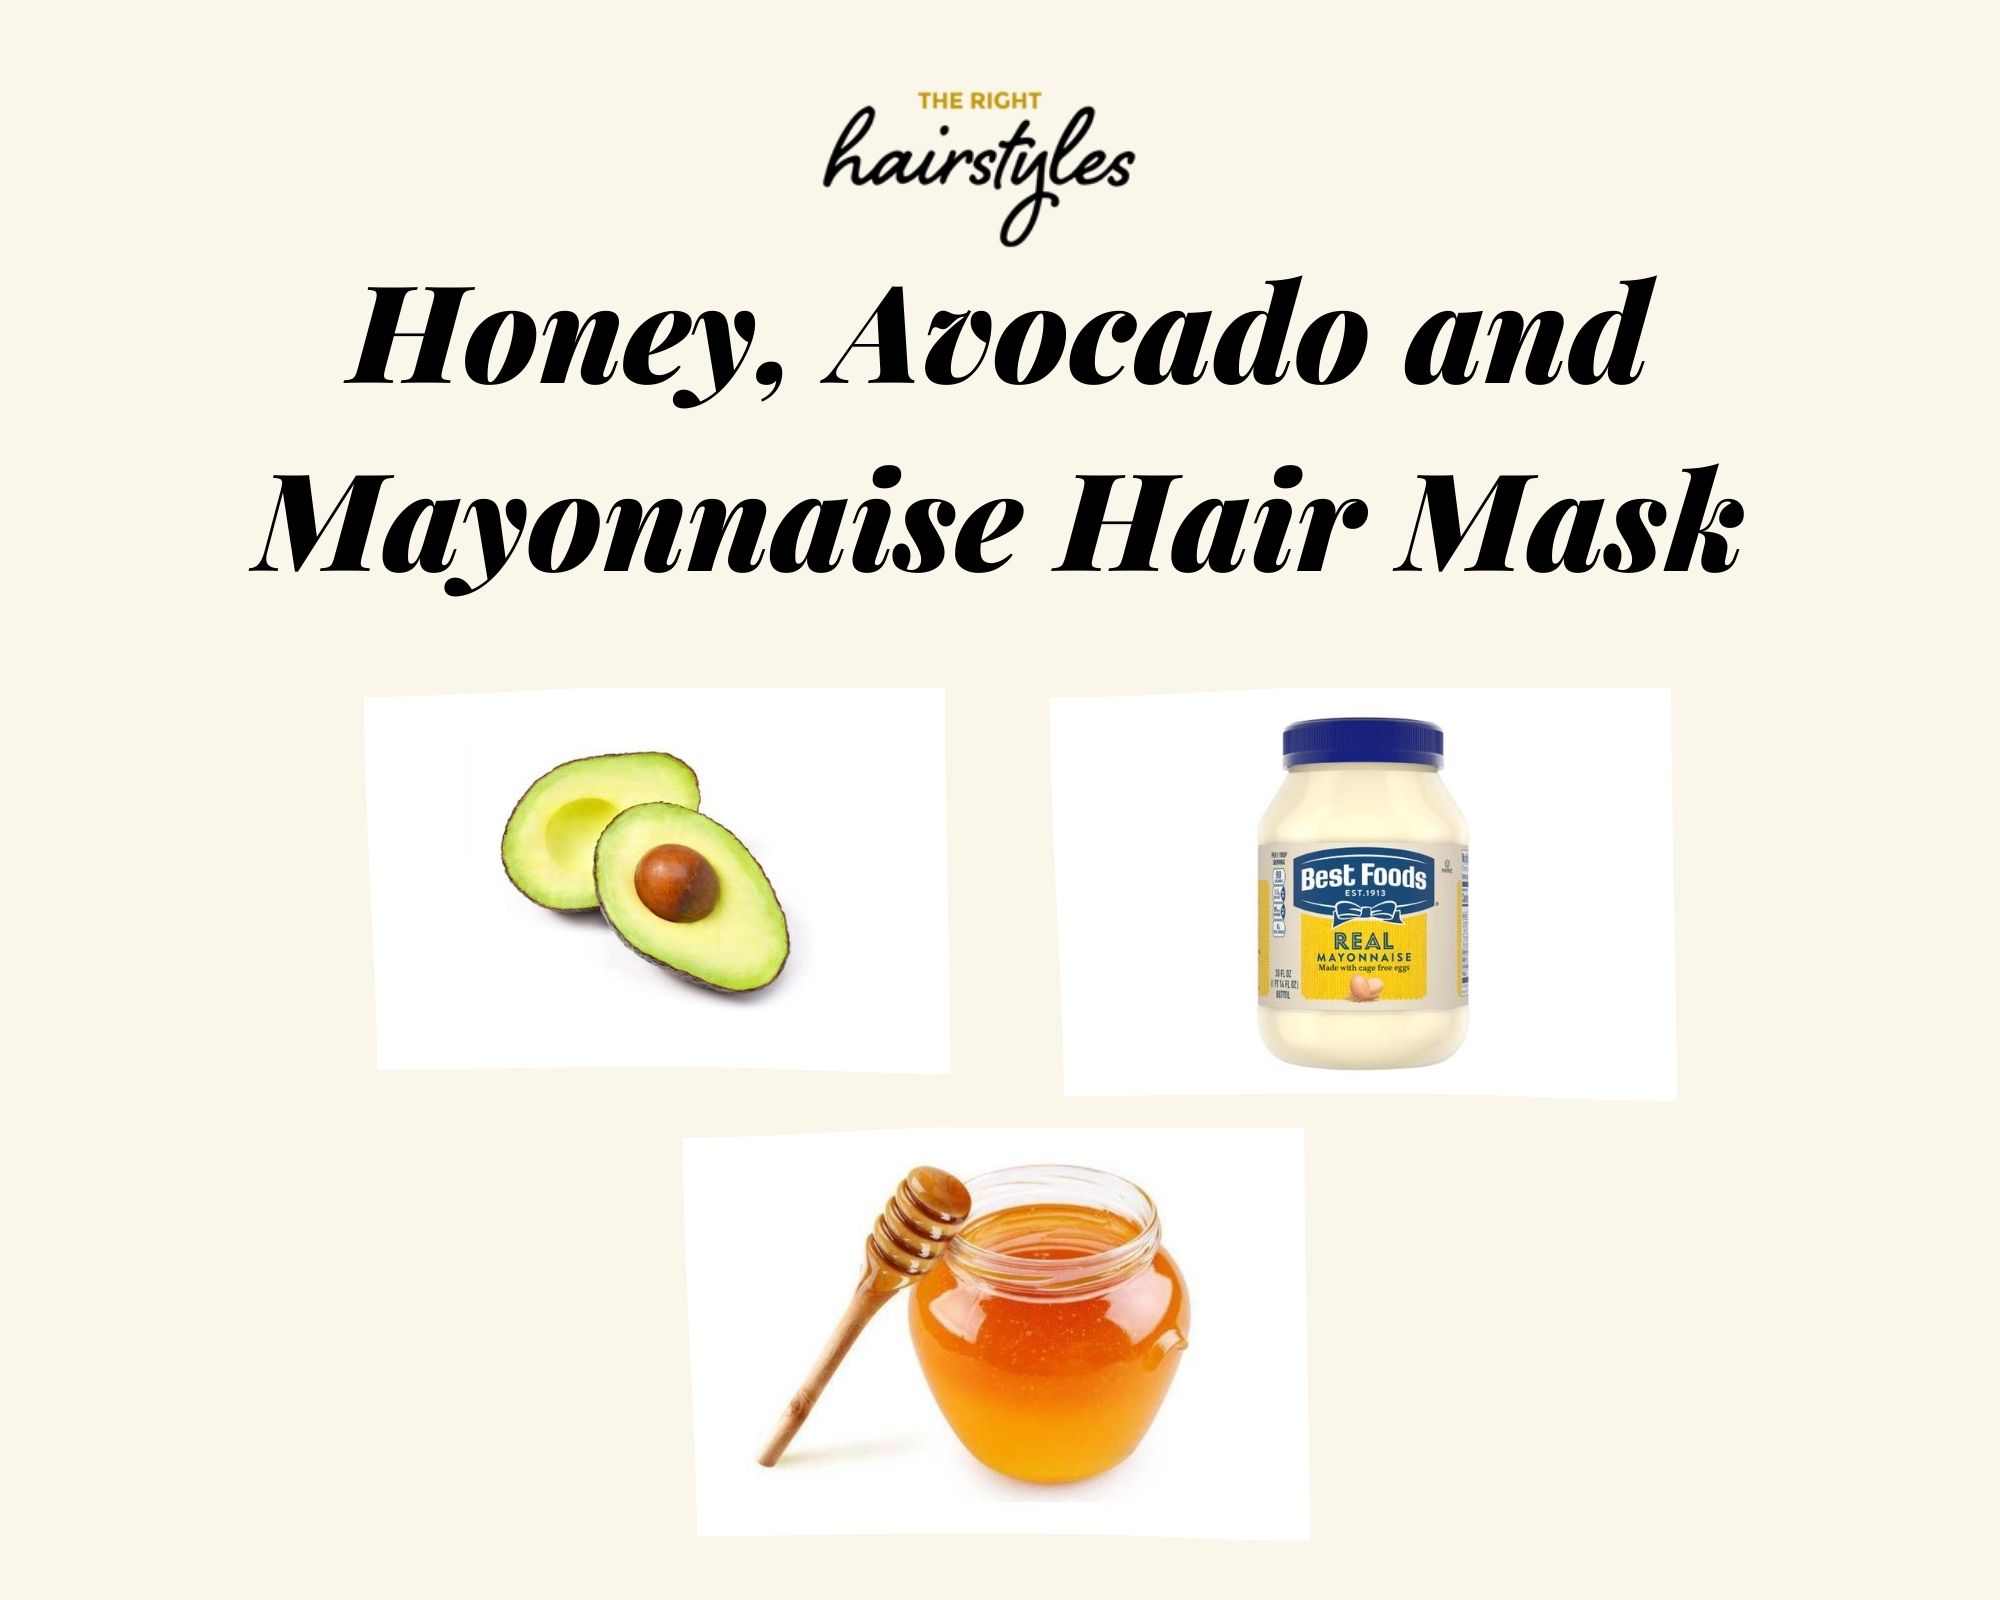 Honey Avocado and Mayonnaise Mask